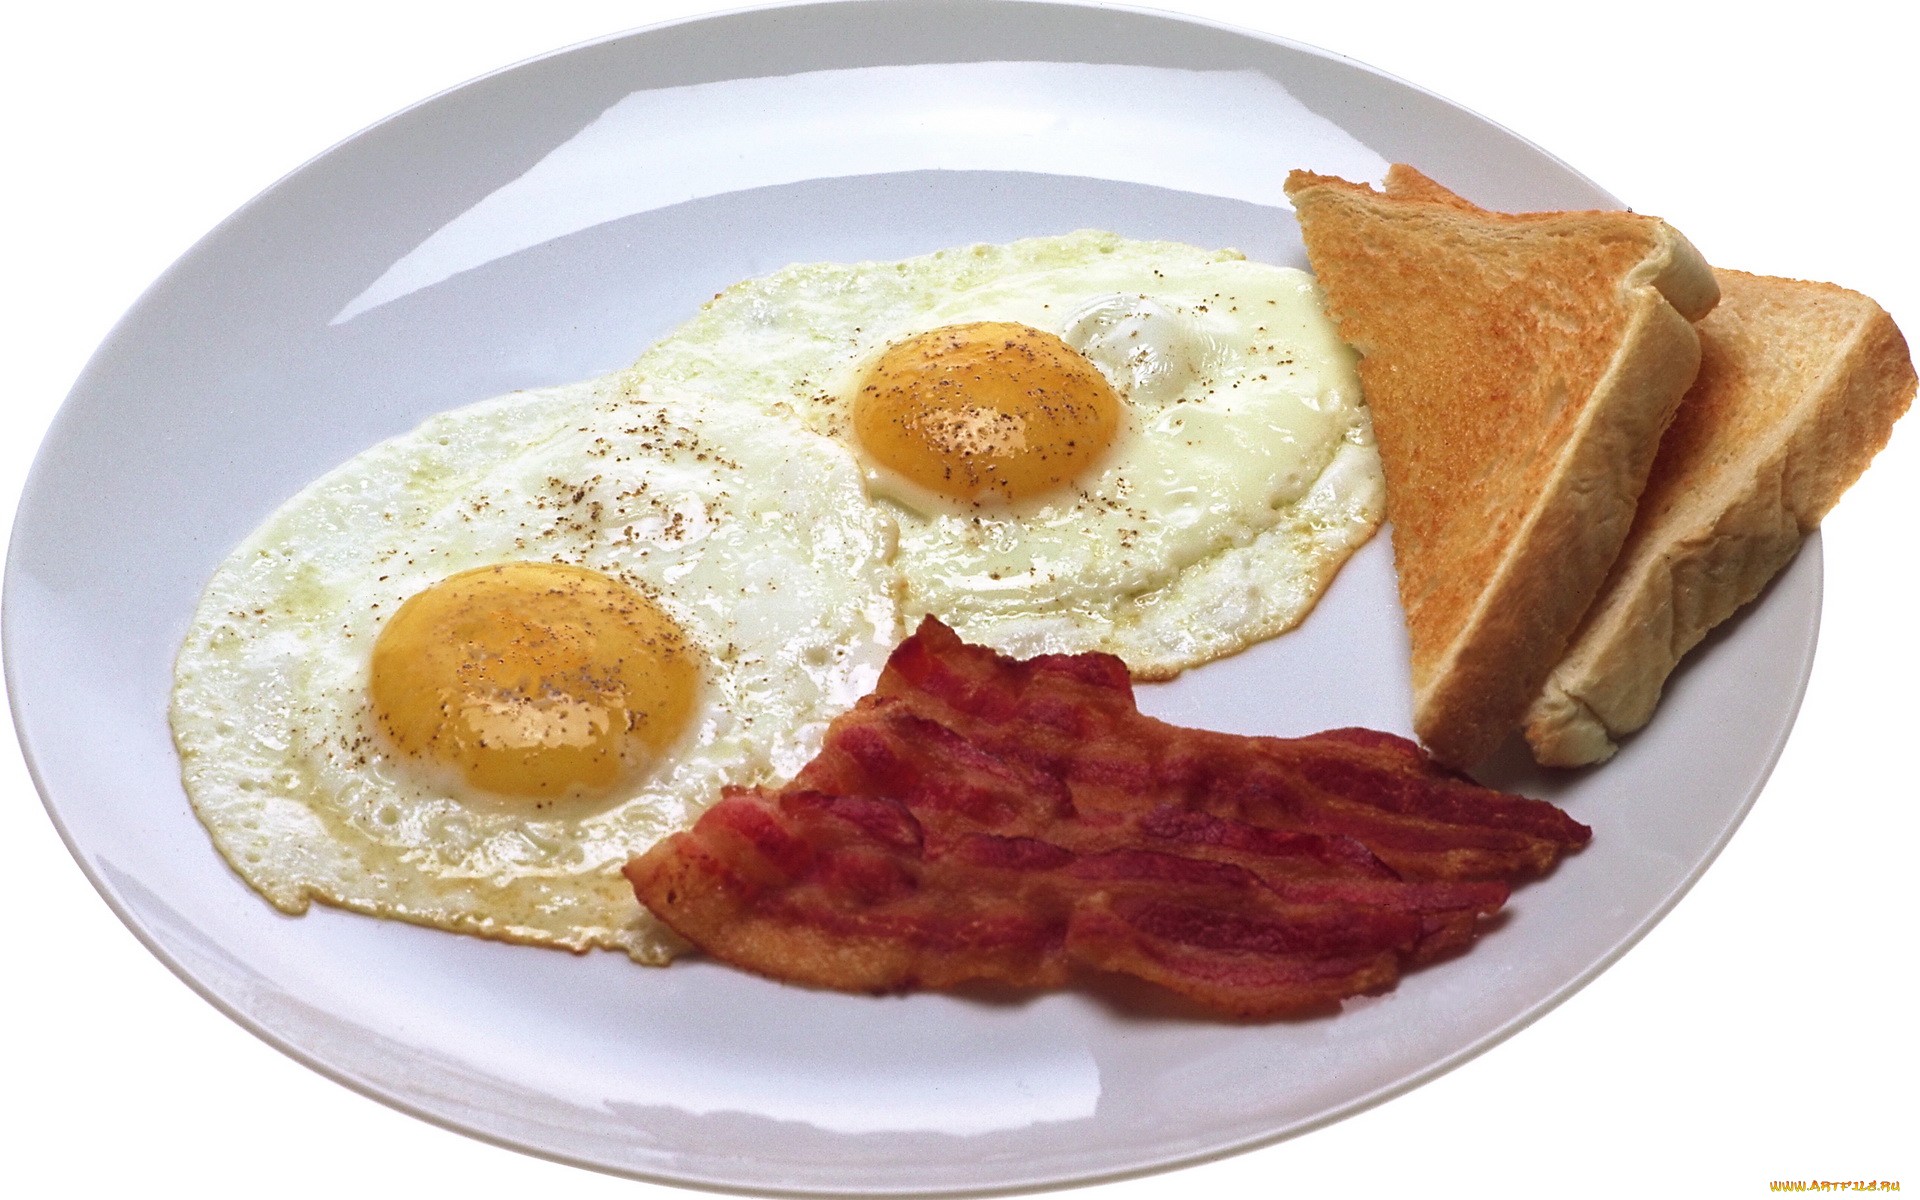 desayuno fondo de pantalla,plato,comida,huevo frito,desayuno completo,desayuno